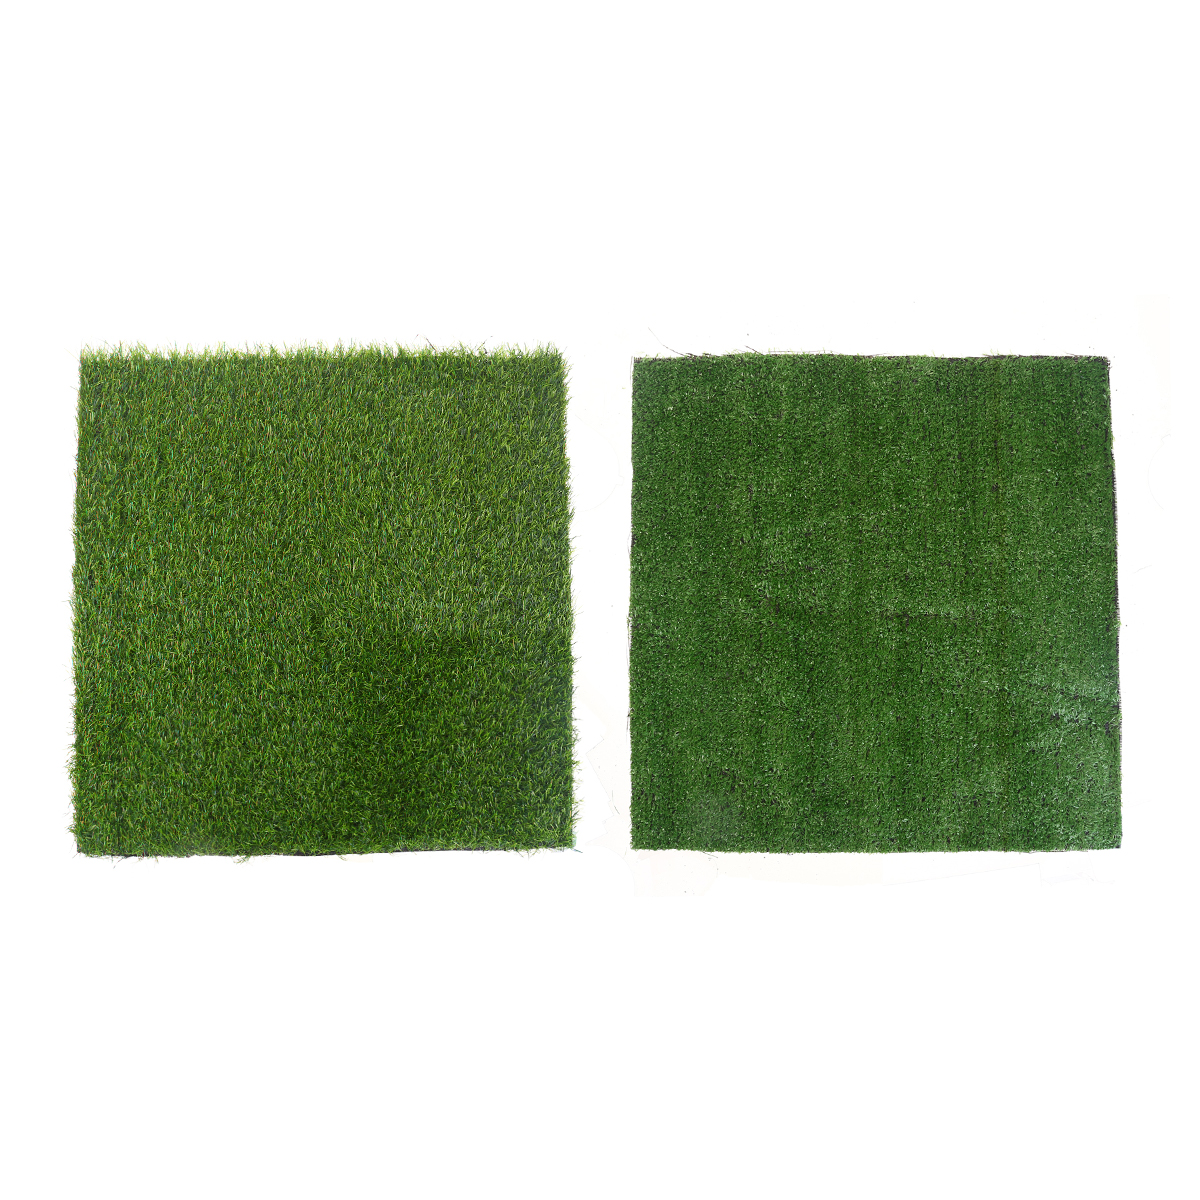 05x05m-Artificial-Simulation-Carpet-Floor-Mat-Green-Artificial-Lawn-1702506-5